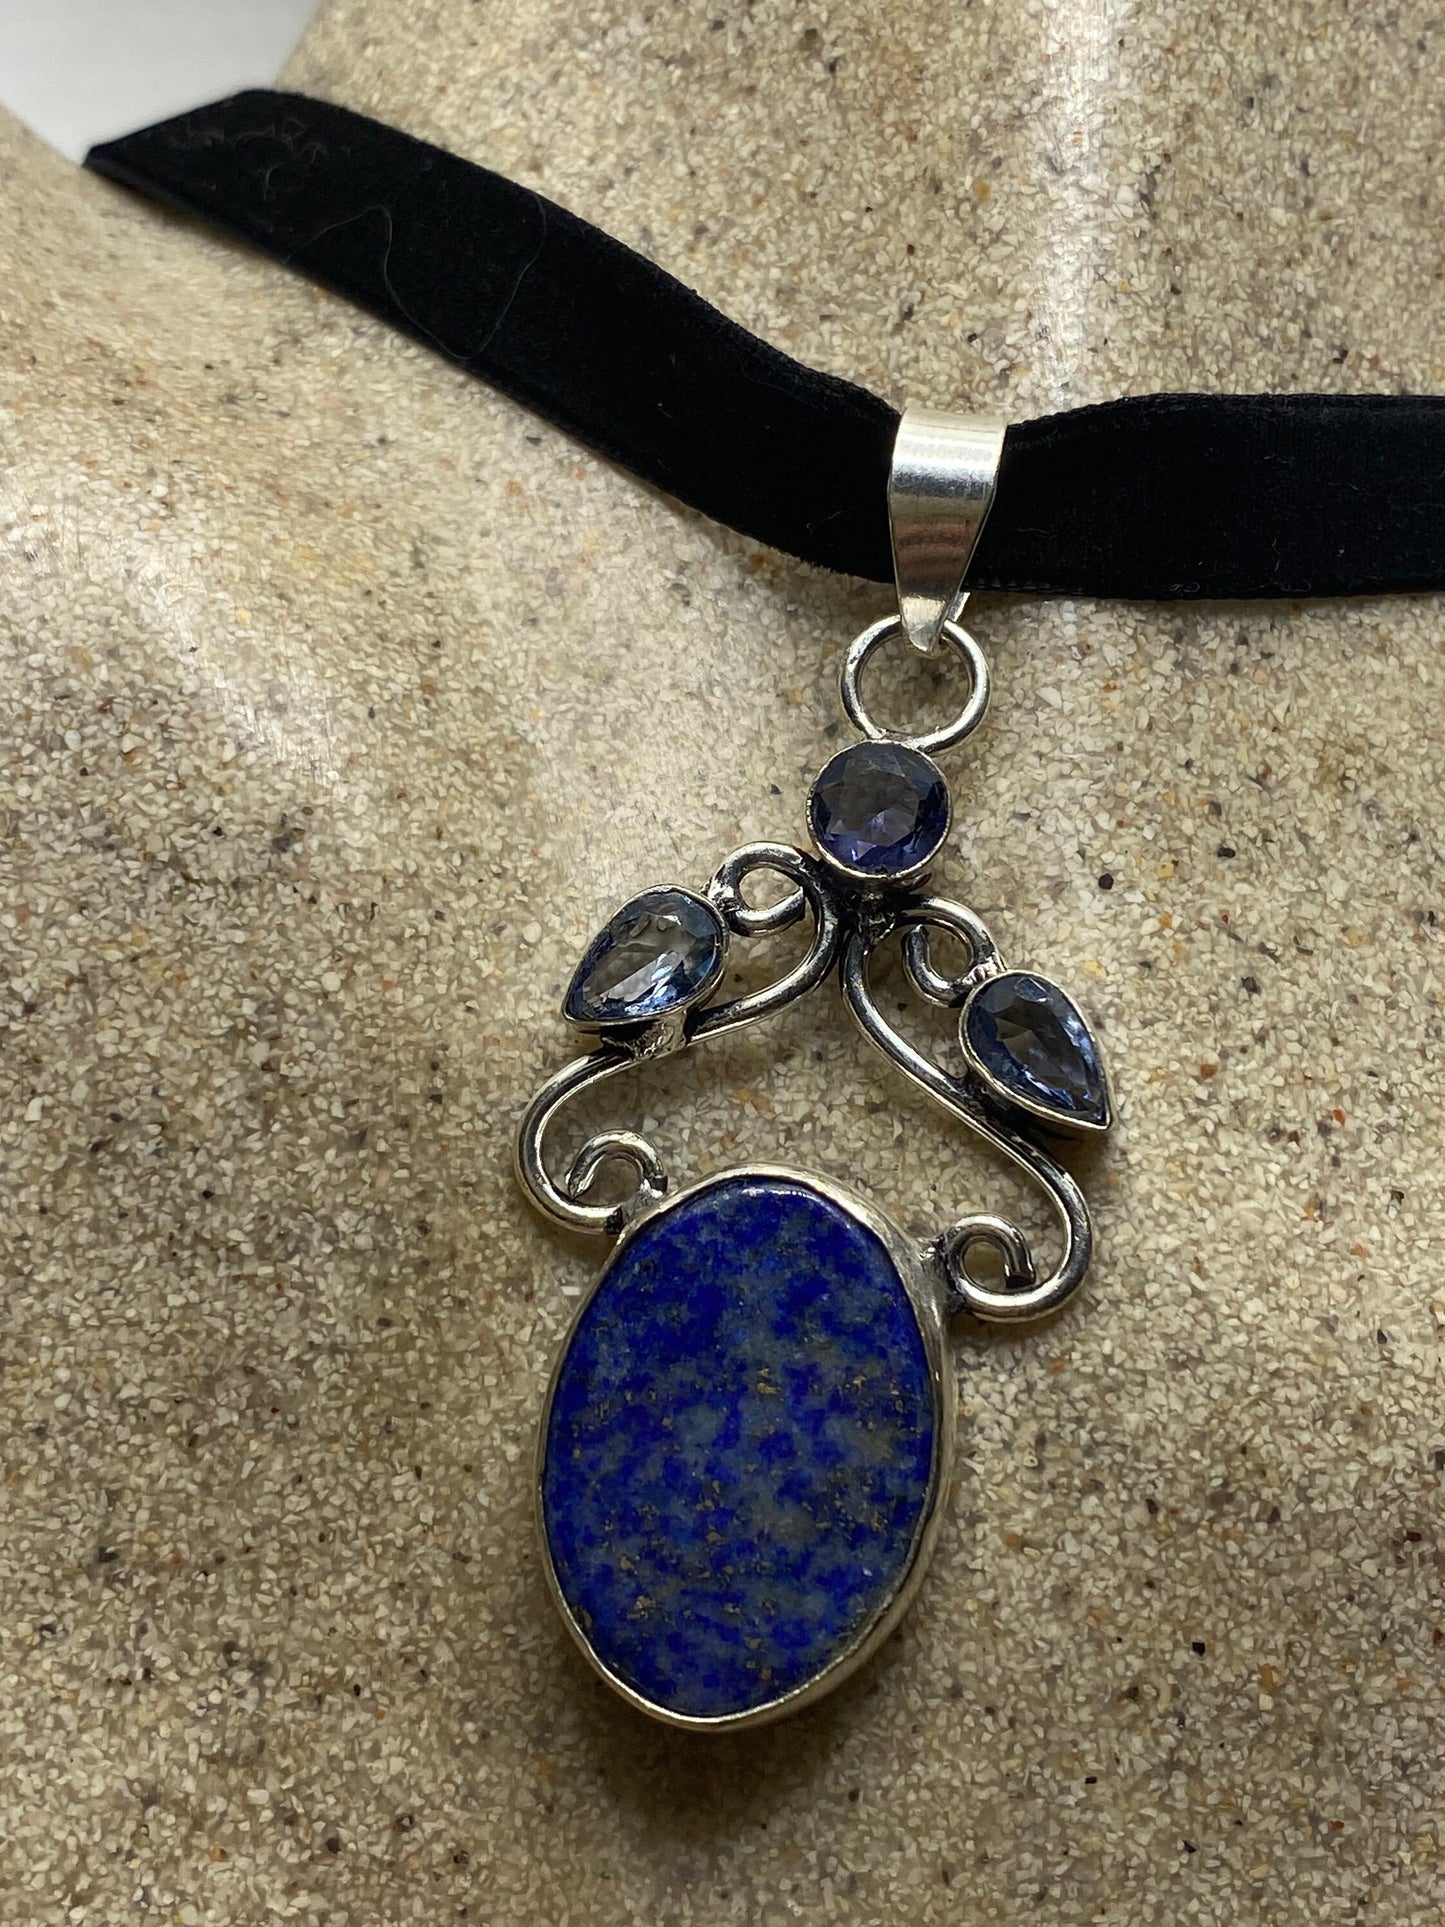 Vintage Blue Lapis Choker Black Velvet Ribbon Necklace.